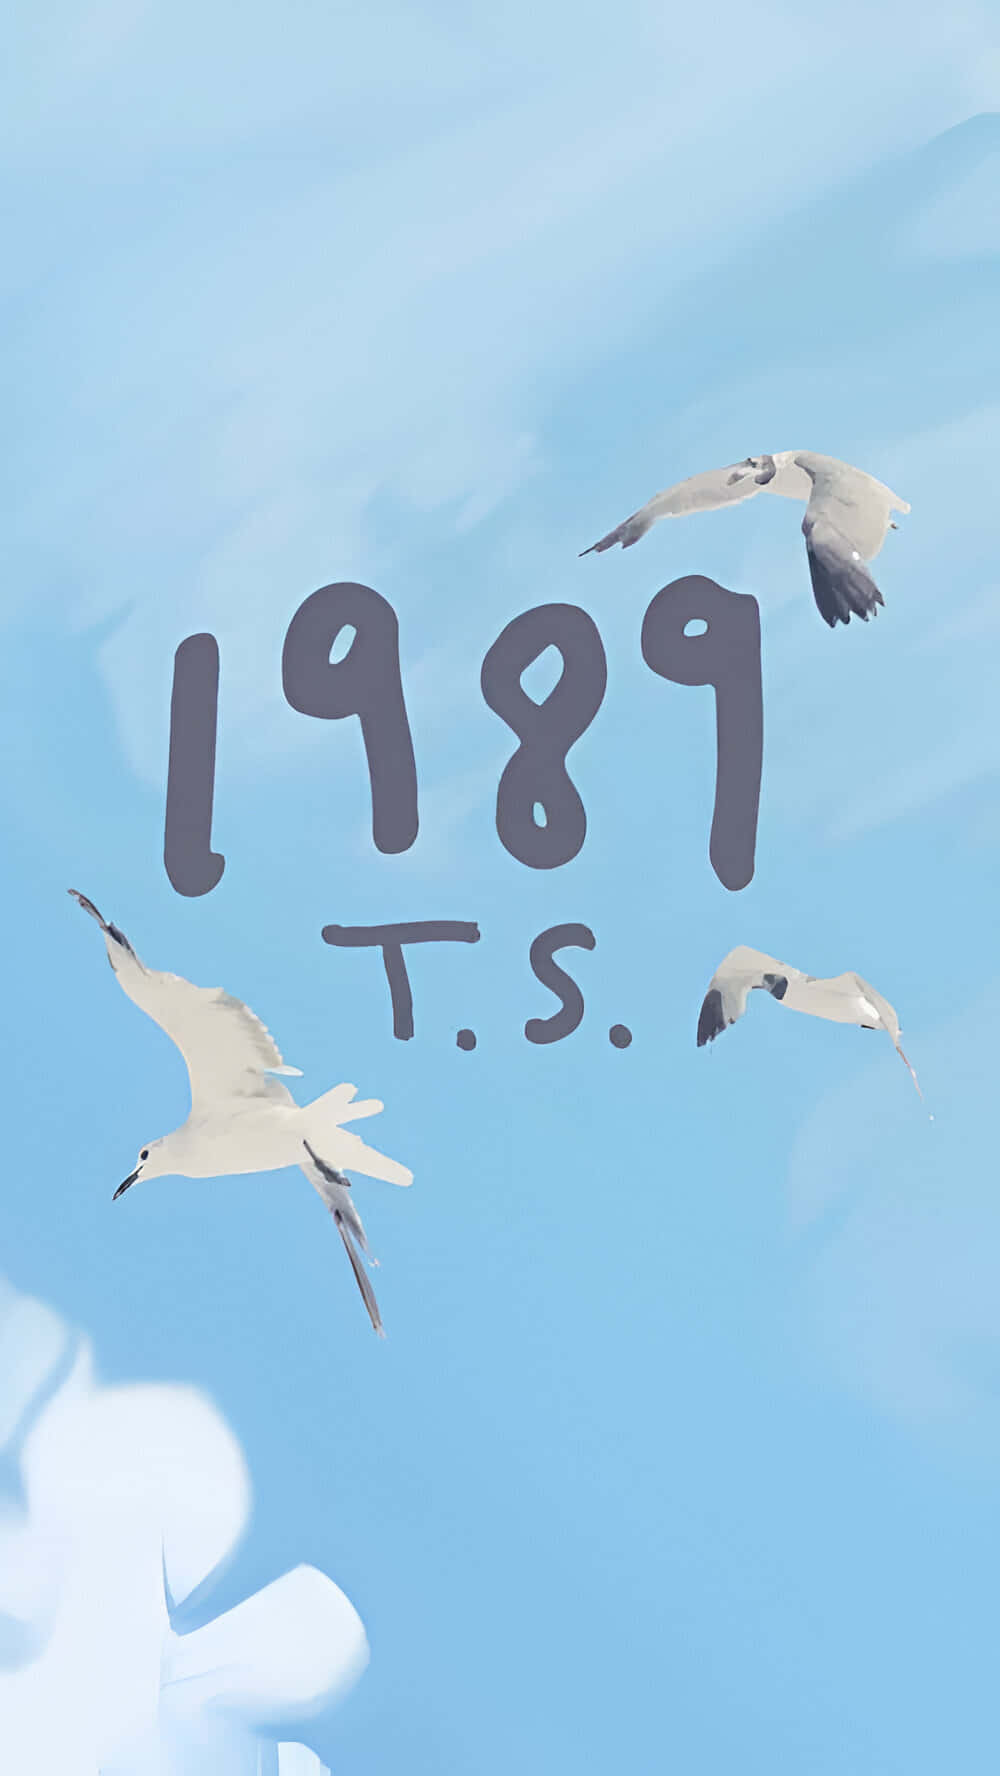 1989 T S Seagulls Sky Wallpaper